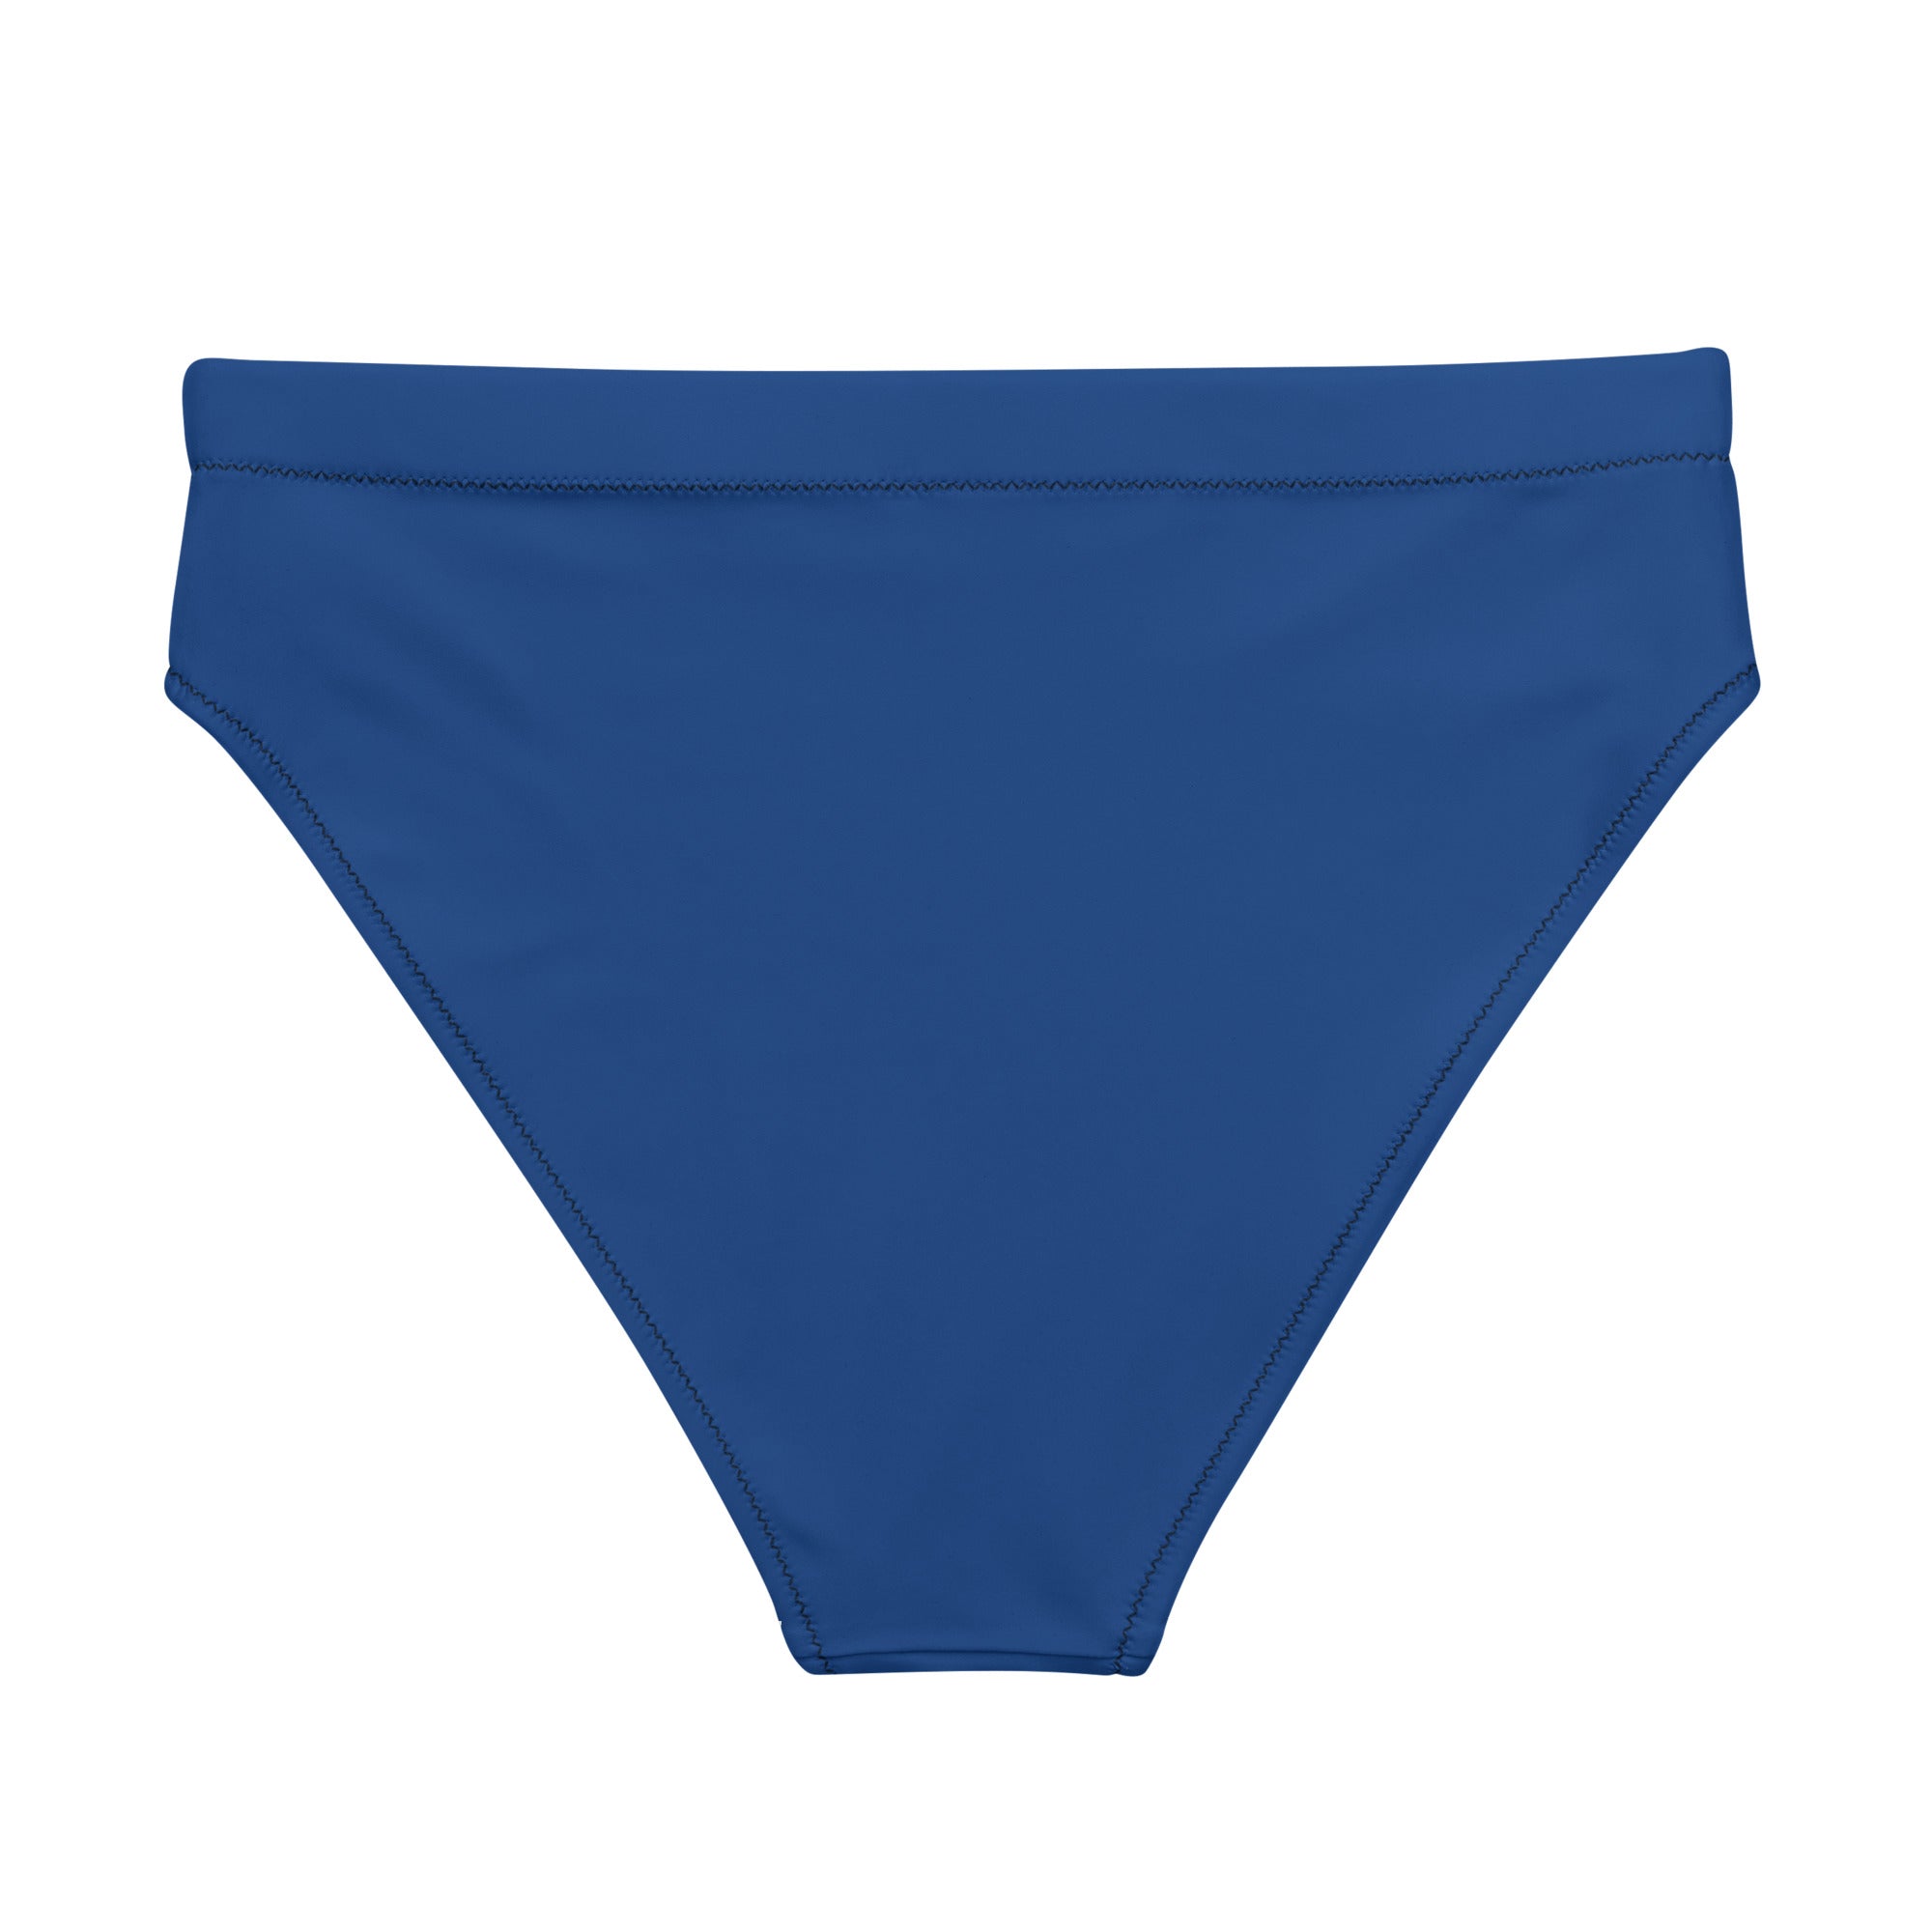 SOLID BLUE high-waisted bikini bottom